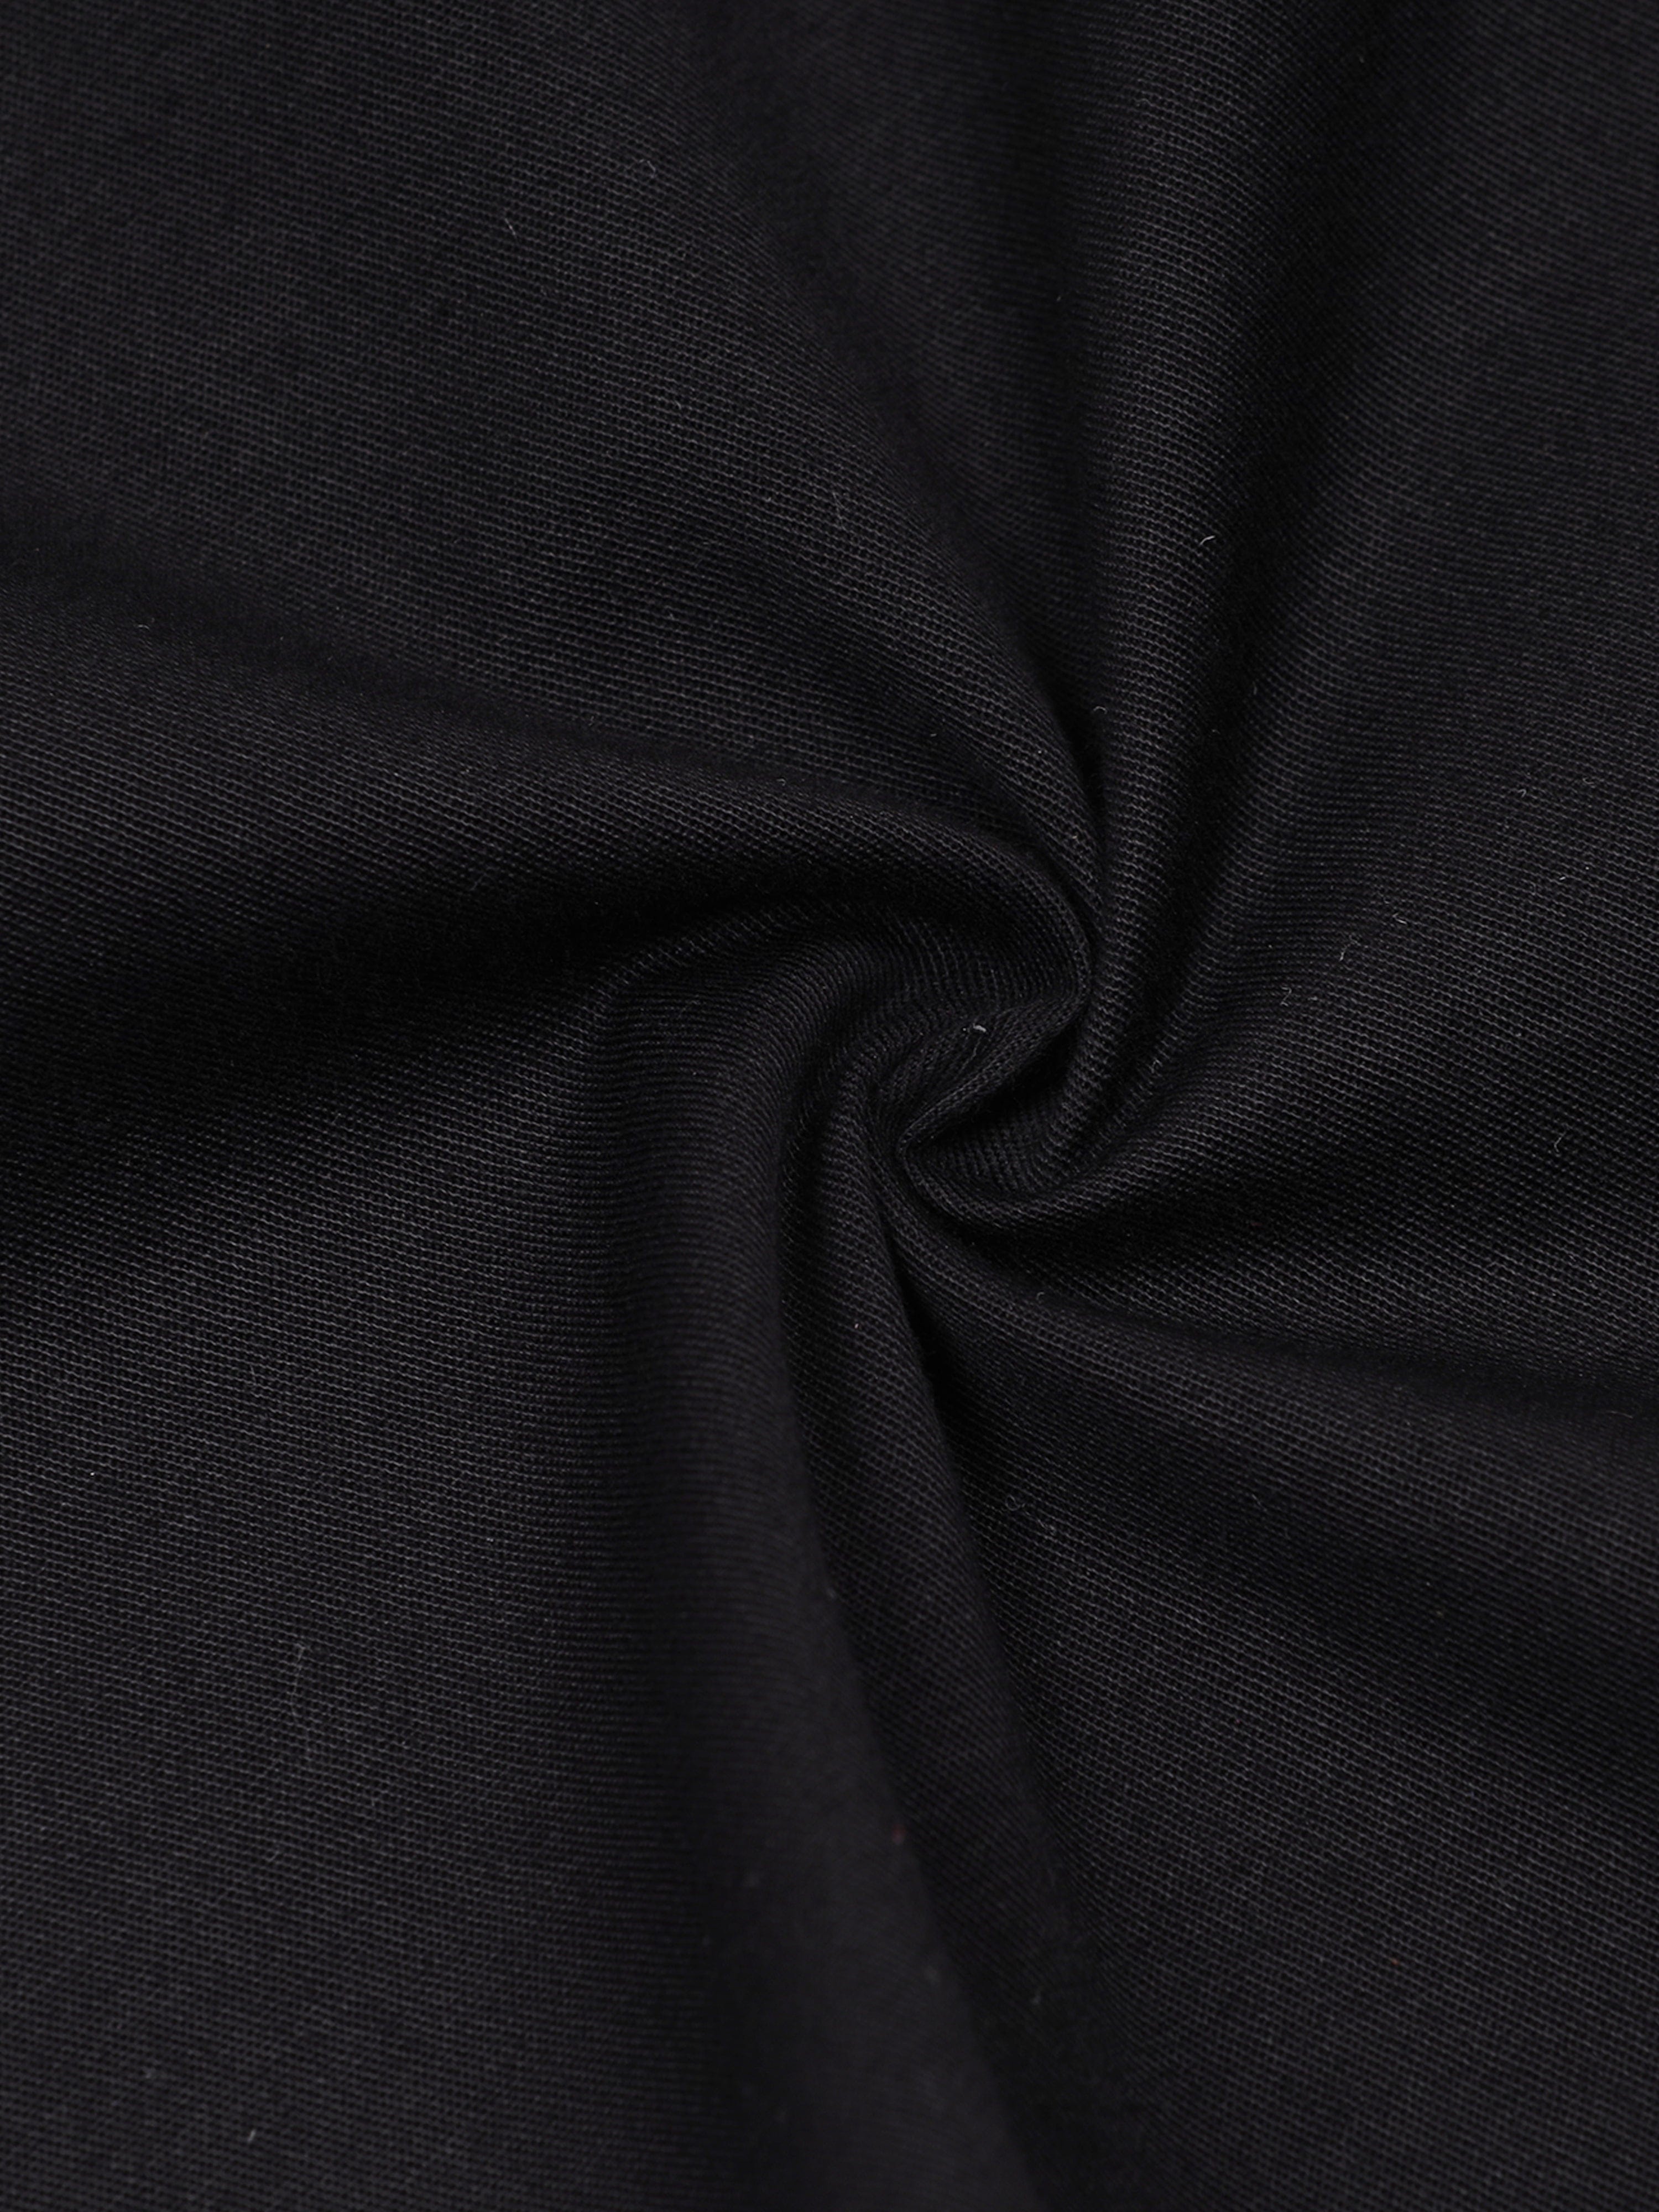 Shop Stylish Black Double Pocket Shirt OnlineRs. 1349.00